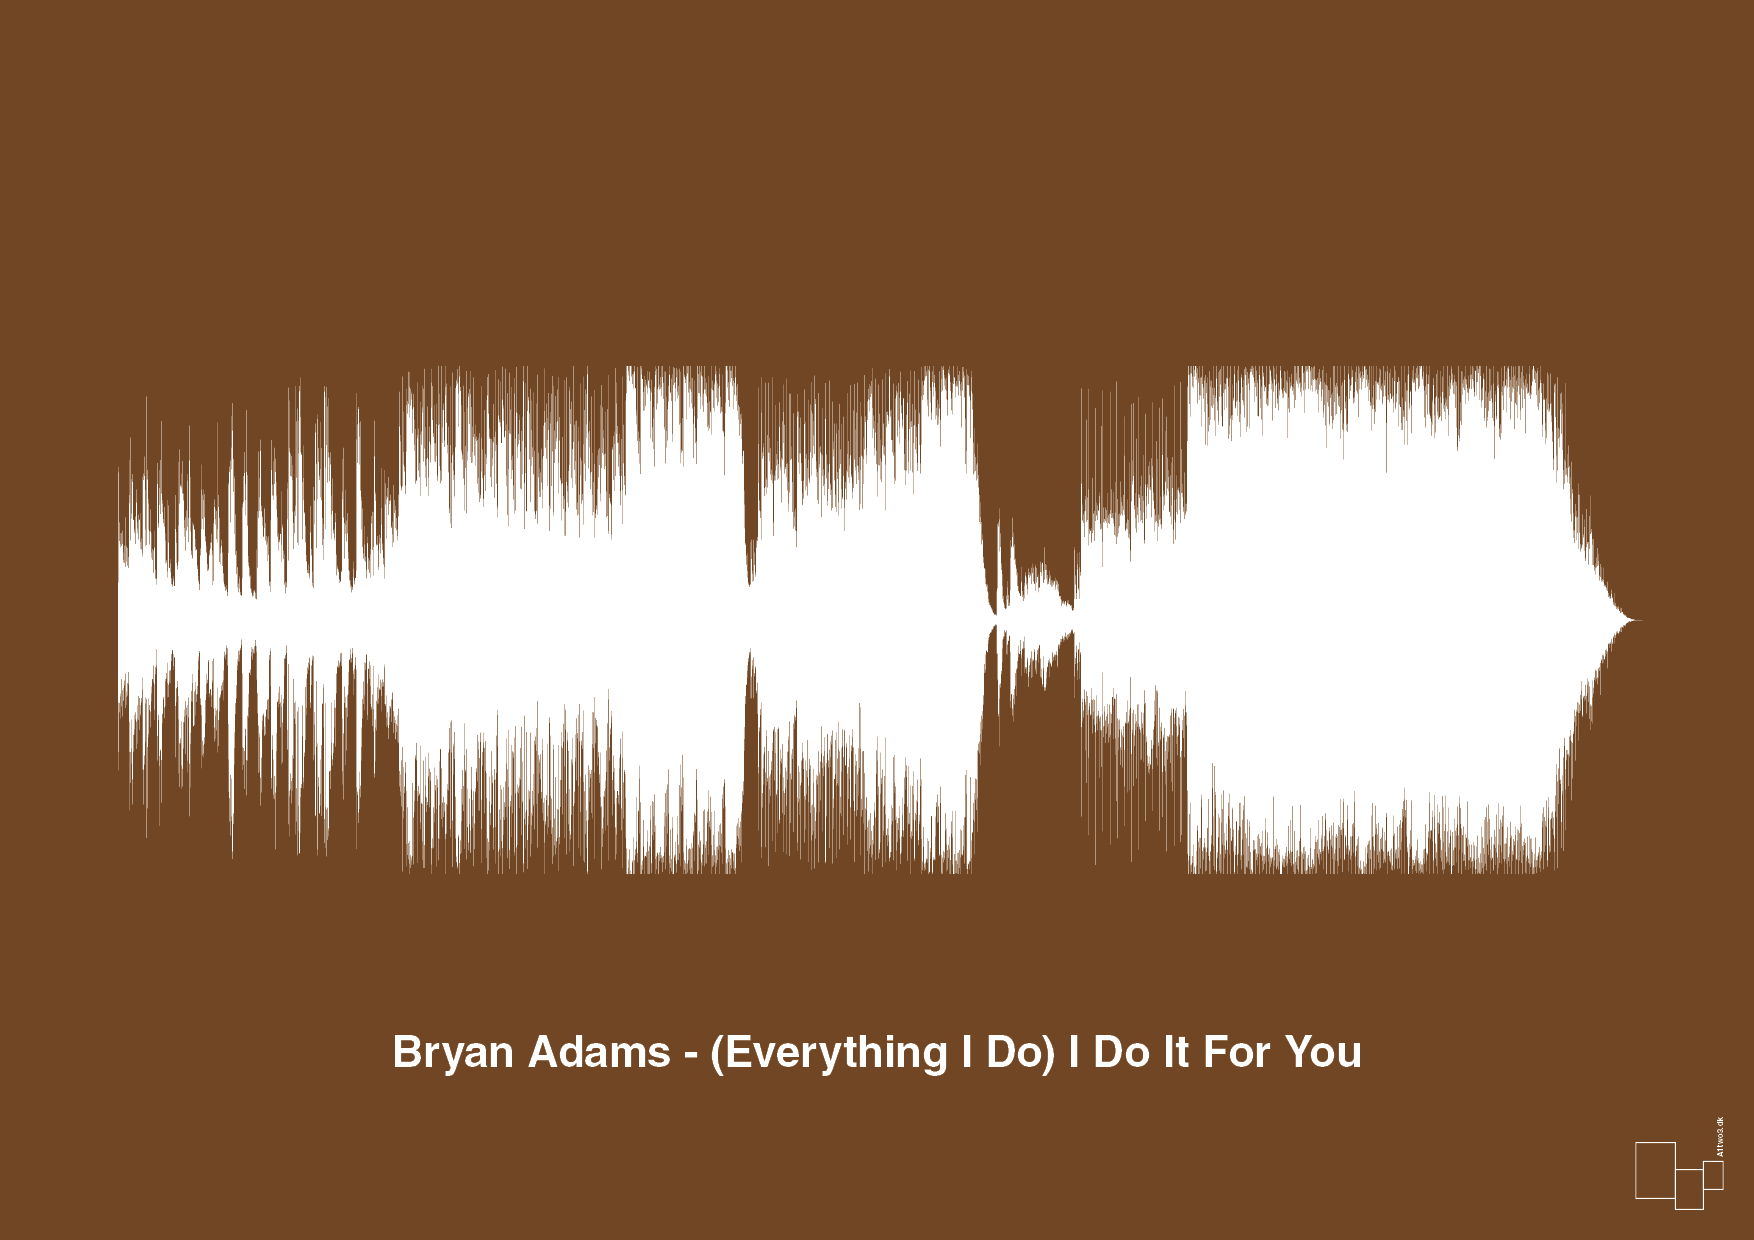 bryan adams - (everything i do) i do it for you - Plakat med Musik i Dark Brown